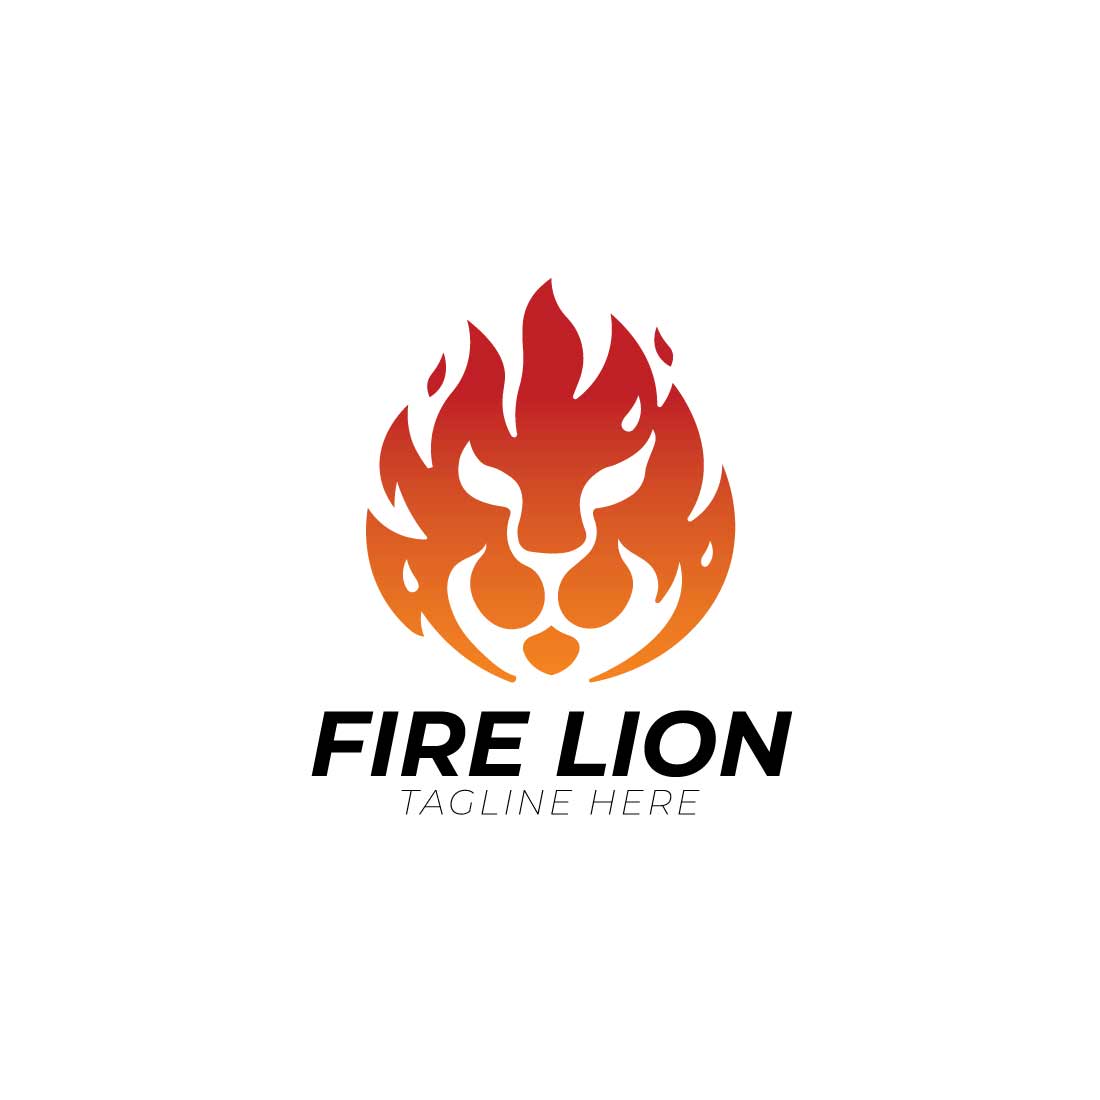 Professional Fire Lion design preview image.